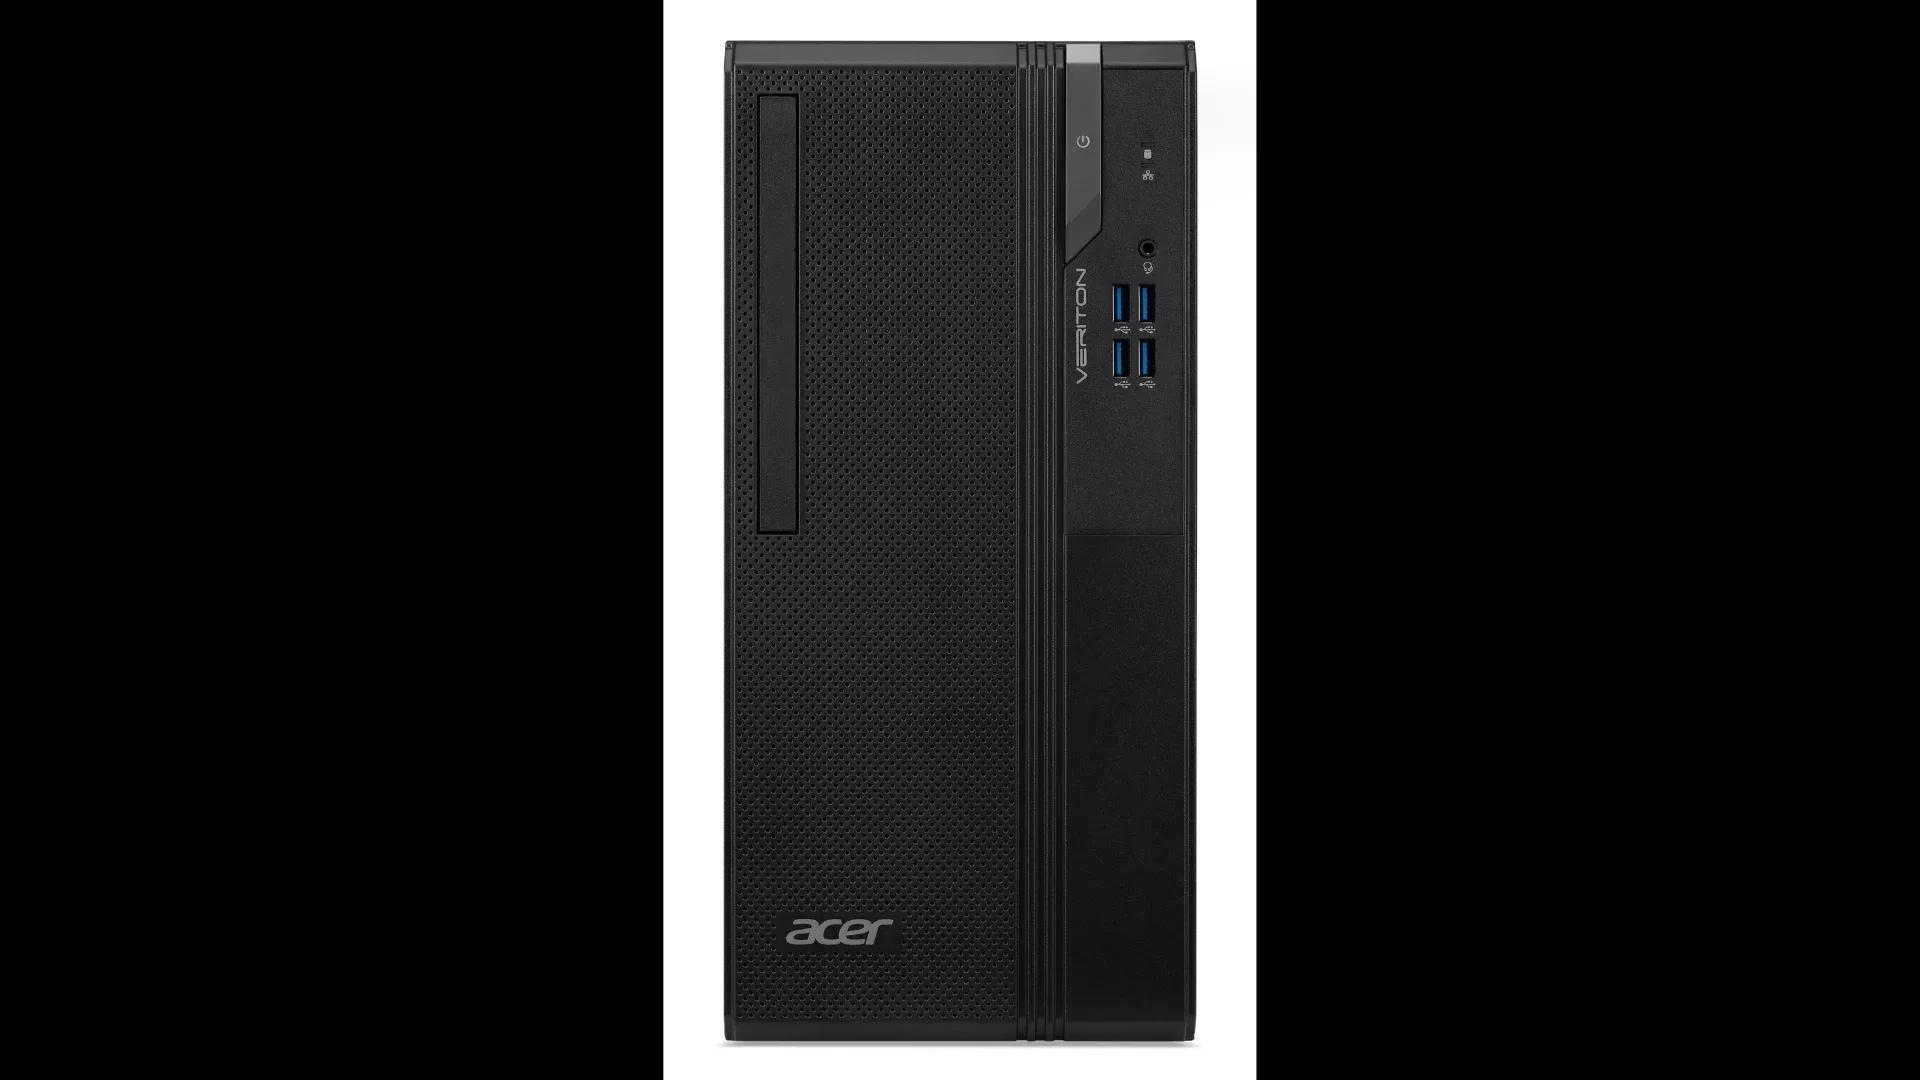 Acer Veriton S2690G Desktop - 12th Gen i5 | 8GB RAM | 256GB SSD | 20" Monitor | 2 Year Warranty